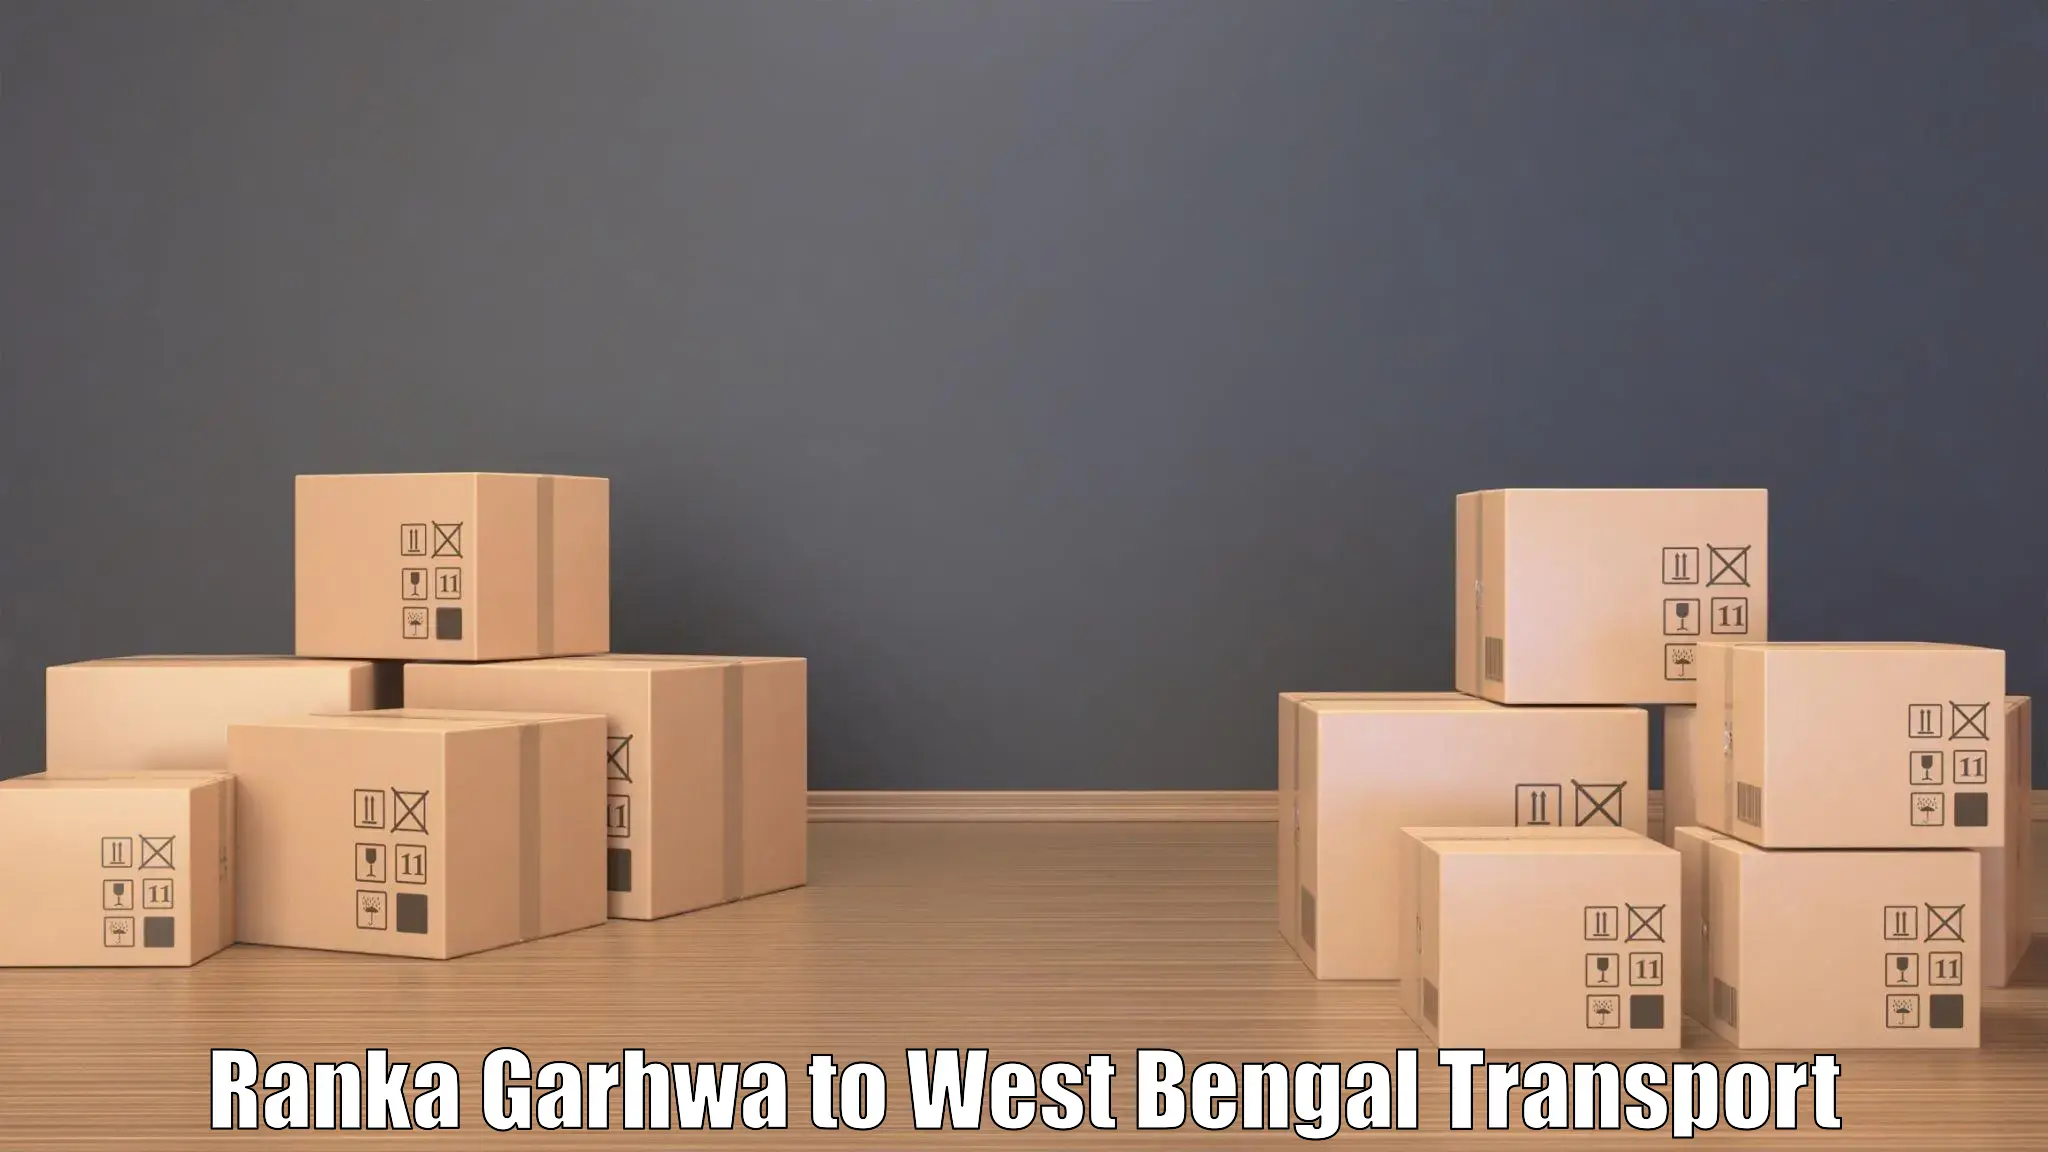 Truck transport companies in India Ranka Garhwa to Pandua